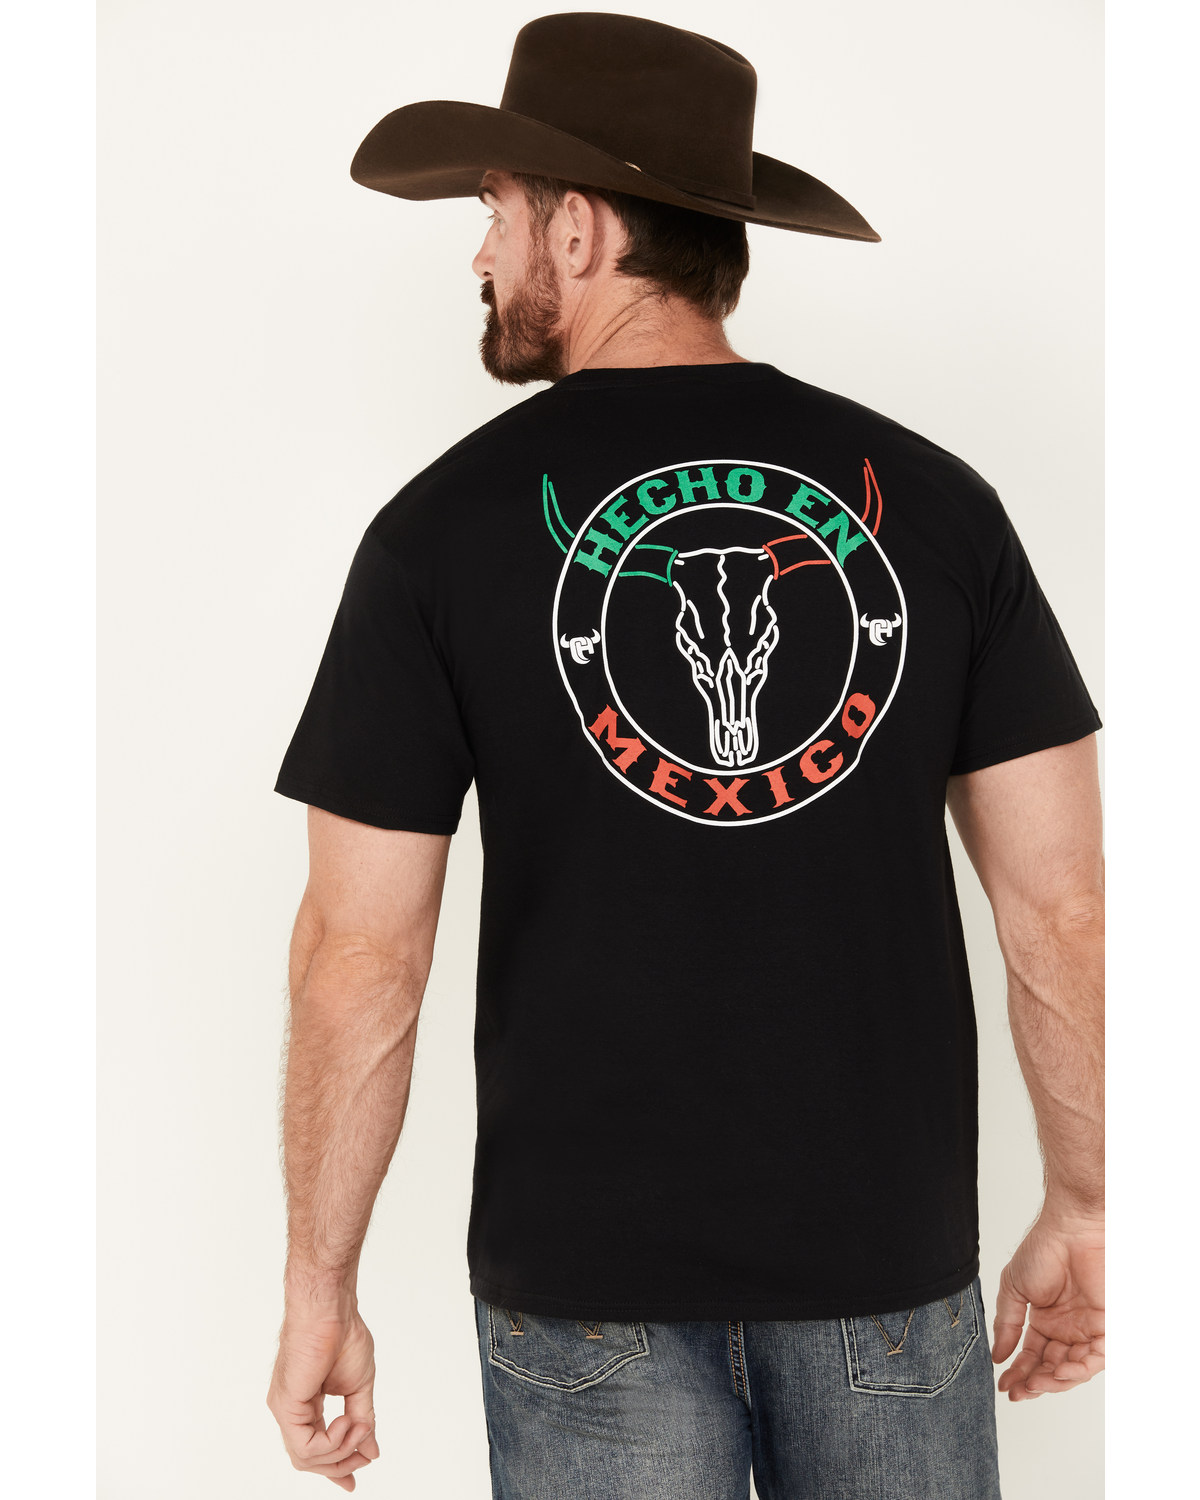 Cowboy Hardware Men's Hecho En Mexico Short Sleeve Graphic T-Shirt